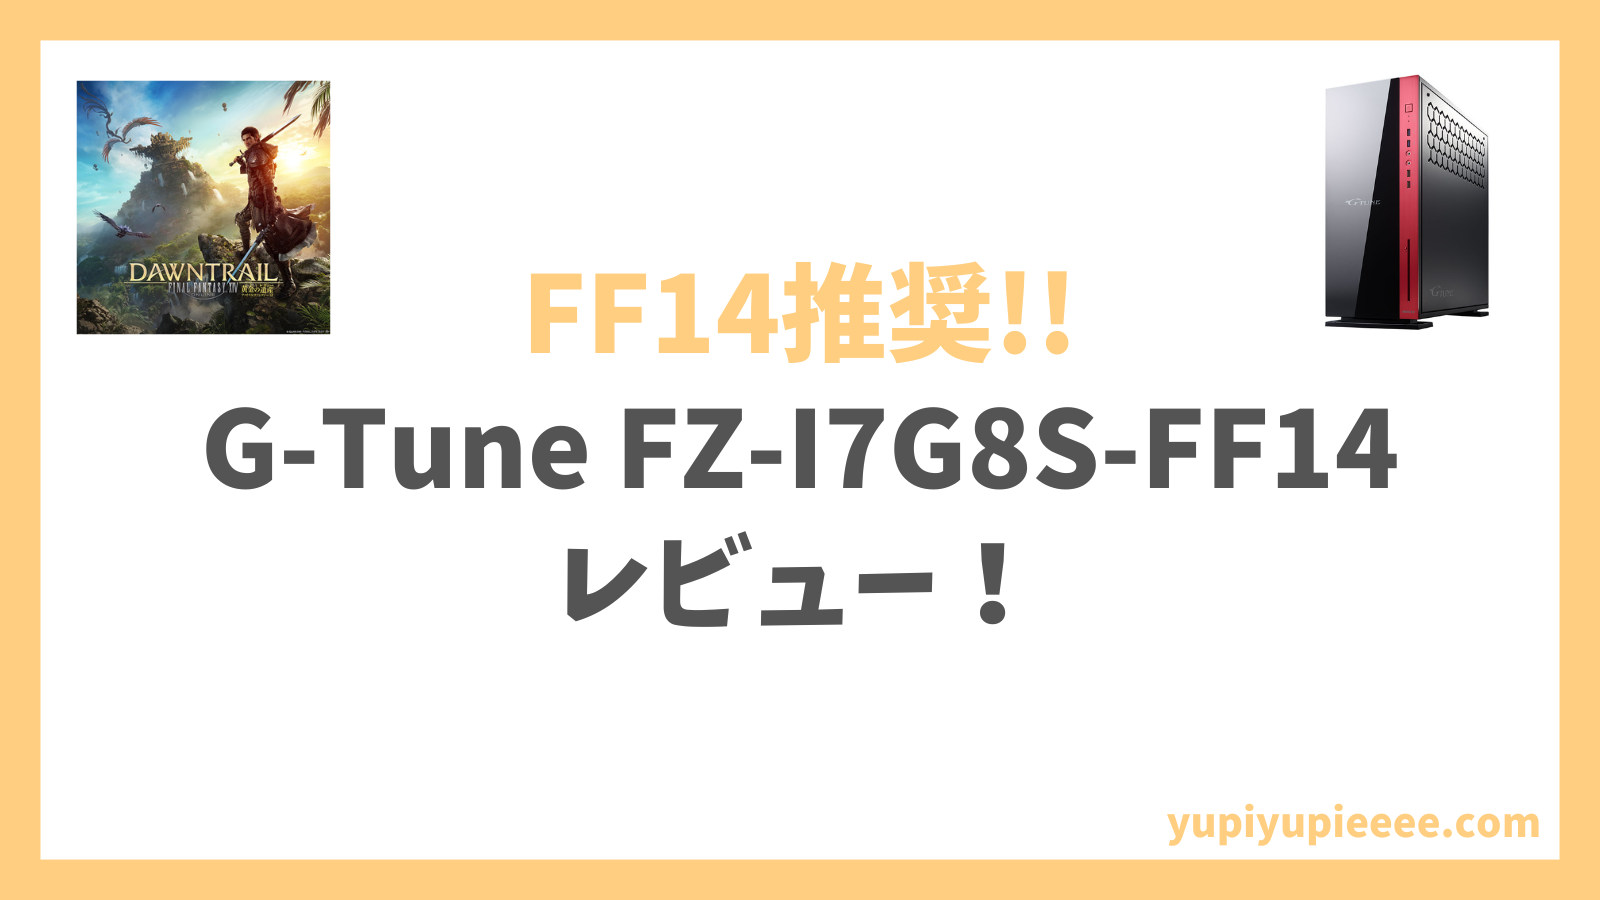 G-Tune FZ-I7G8S-FF14アイキャッチ